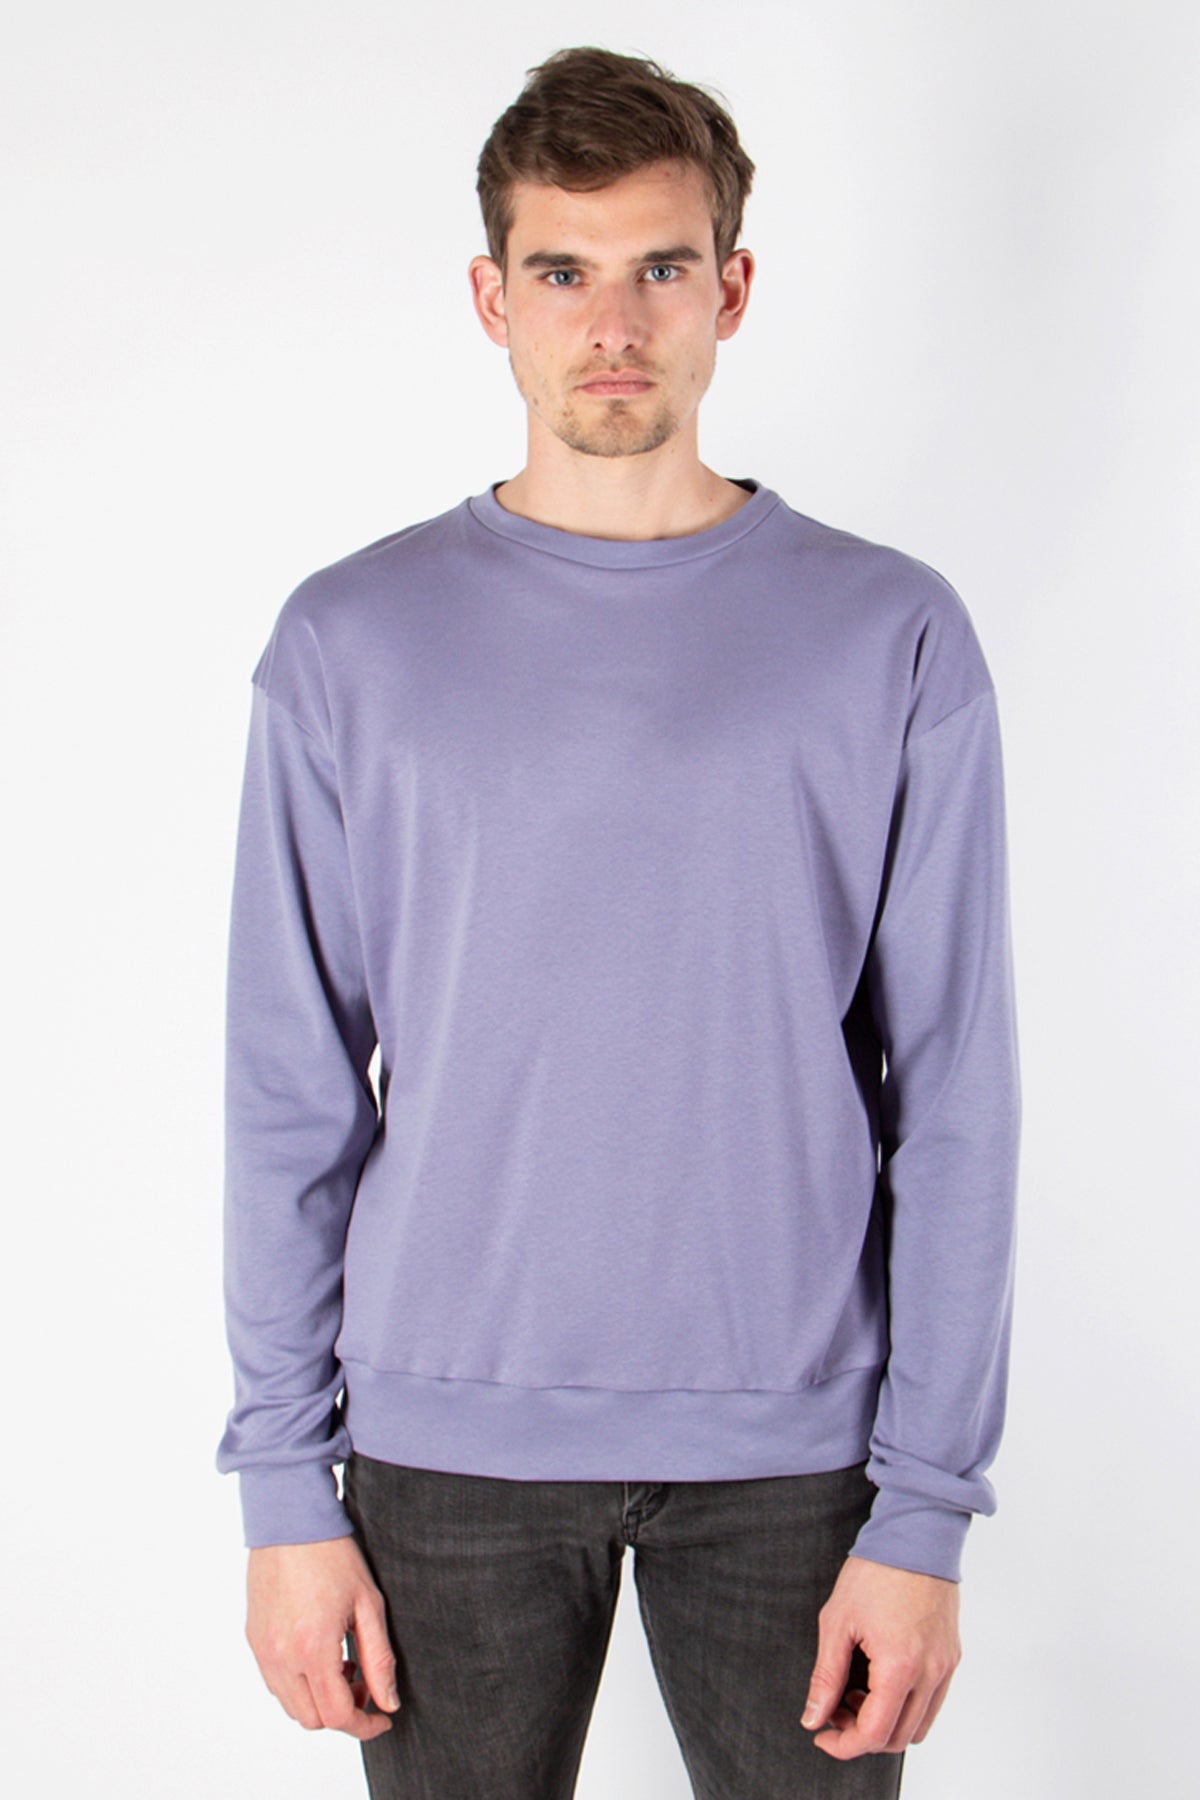 Kimi Sweater Unisex - purple